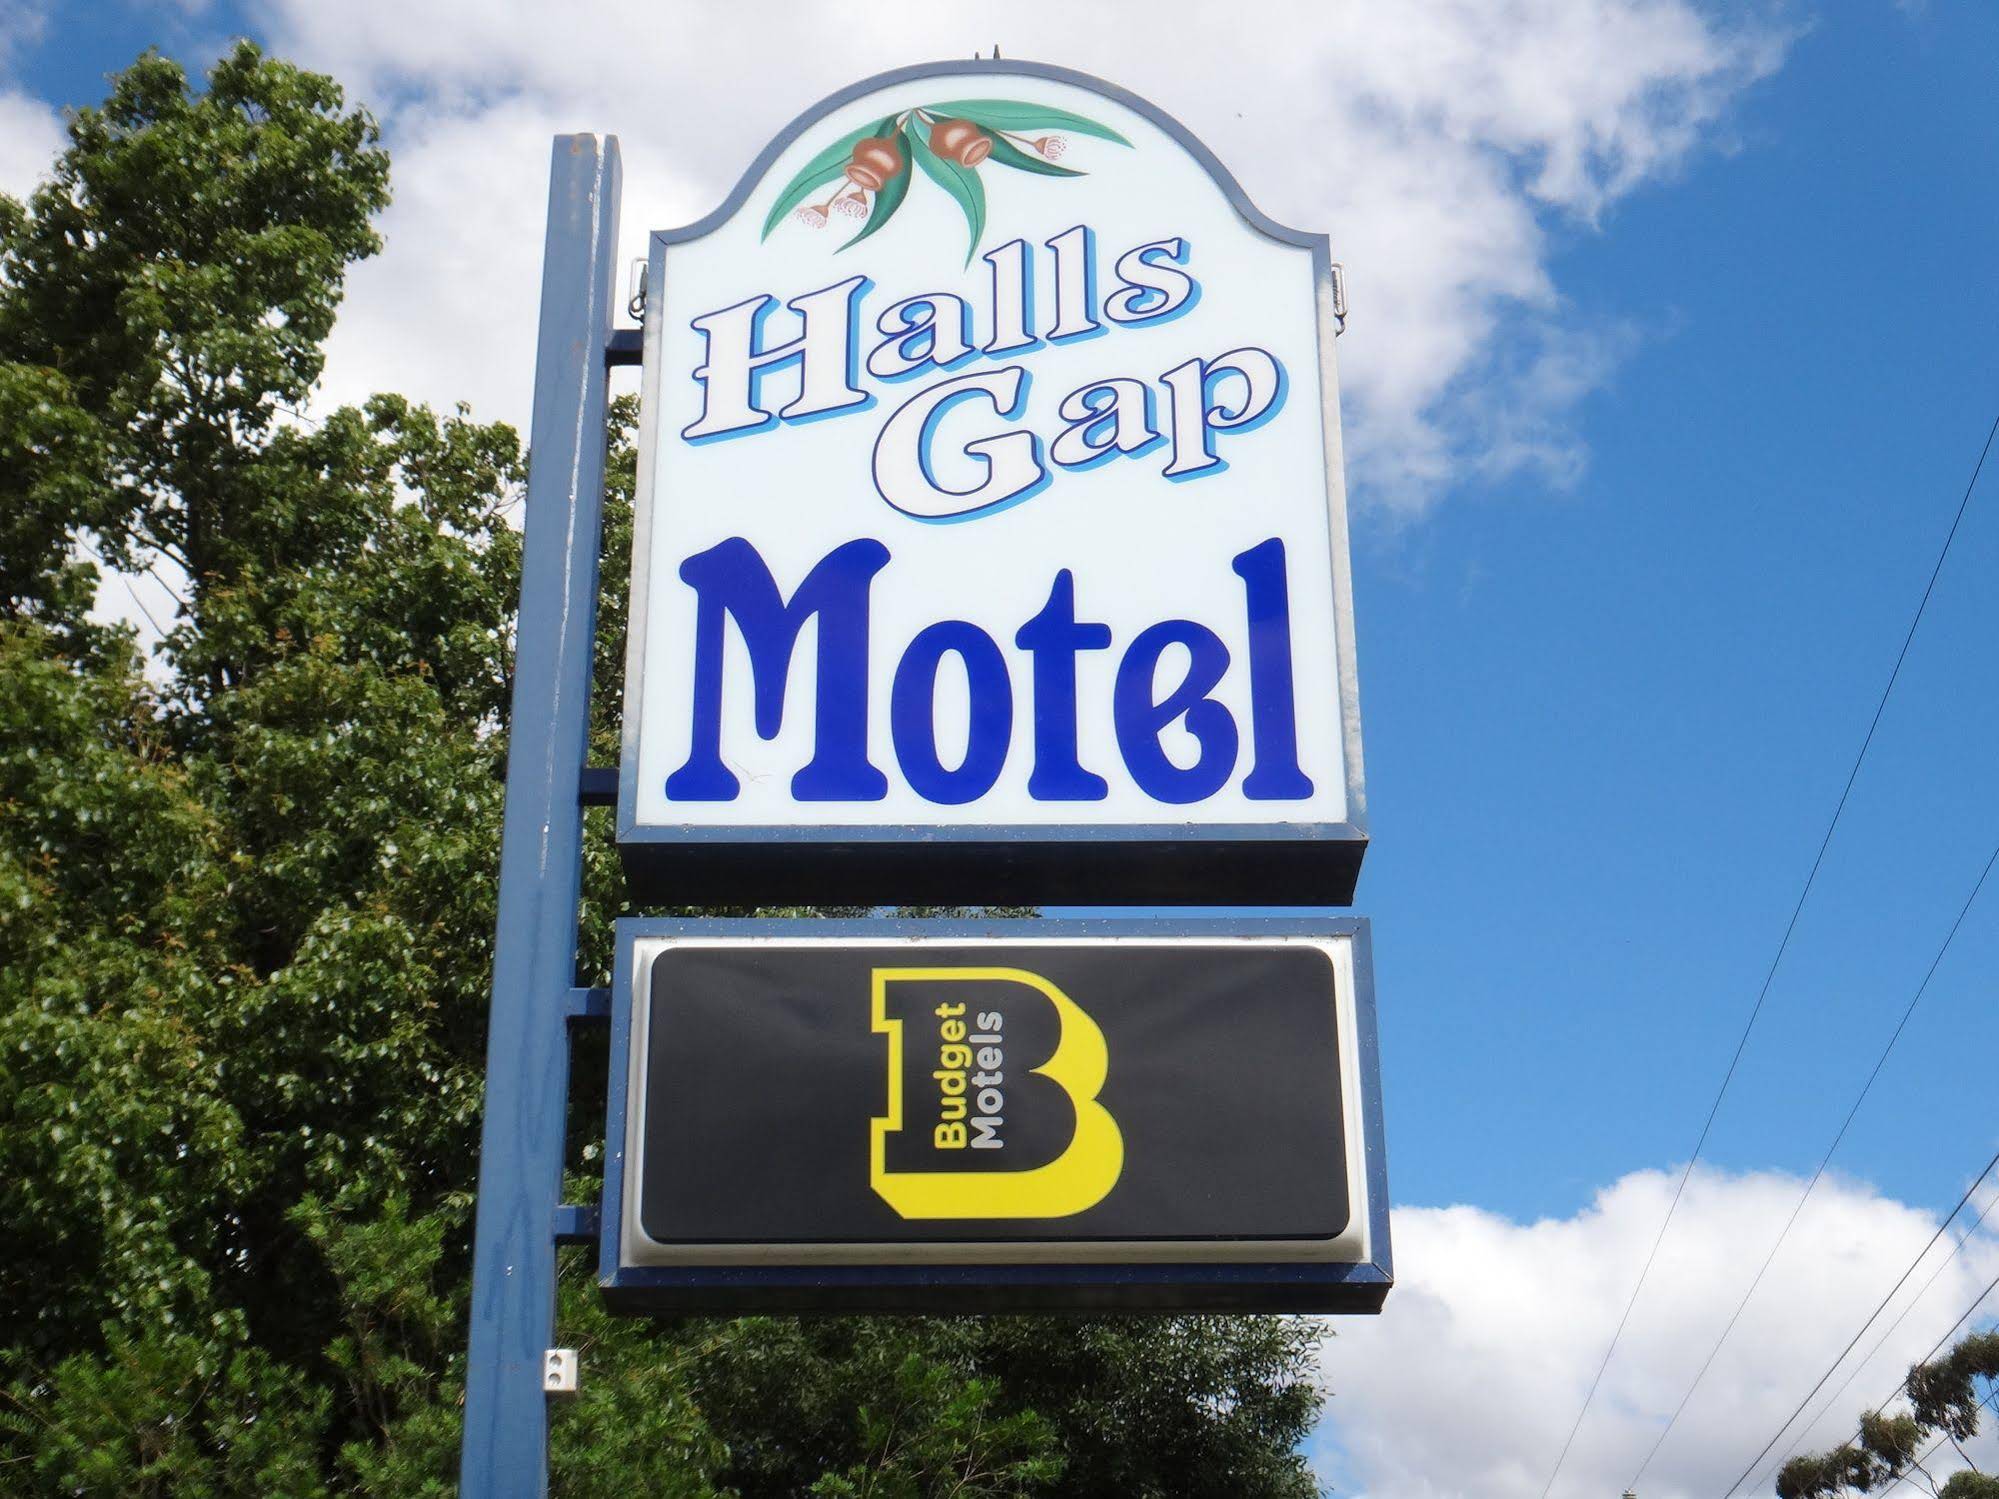 Halls Gap Motel